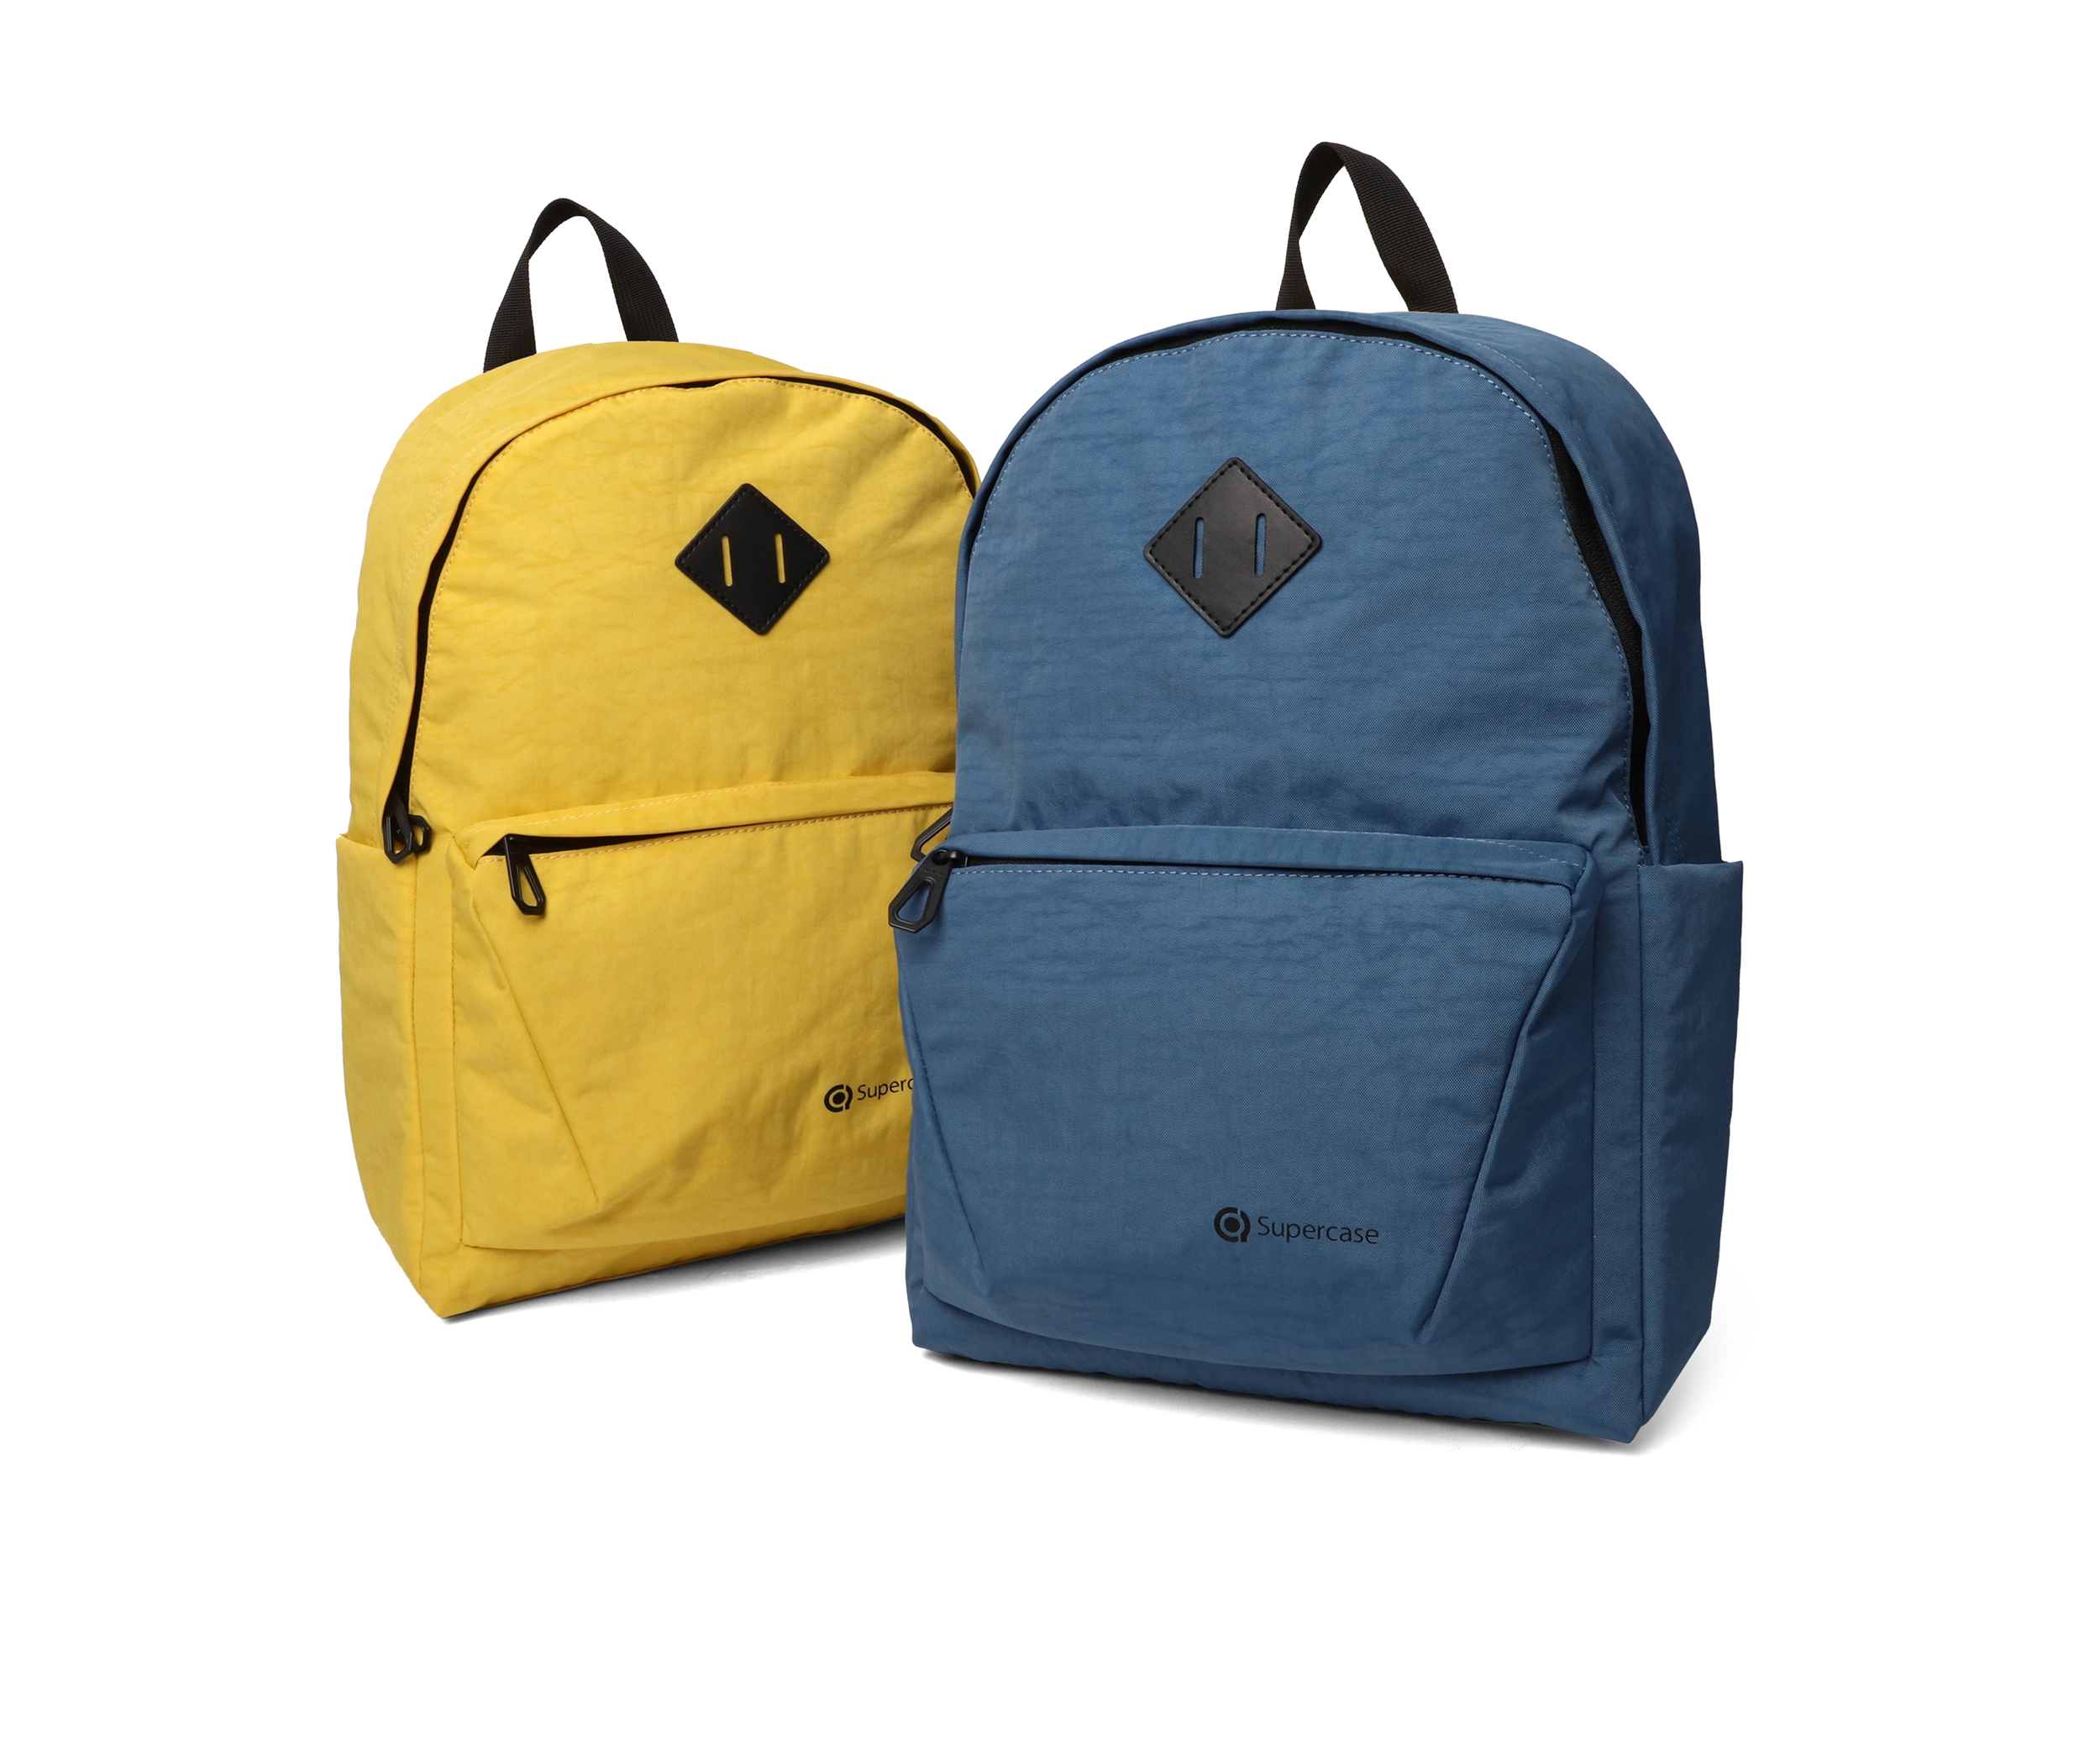 Universal Companion Casual Backpack